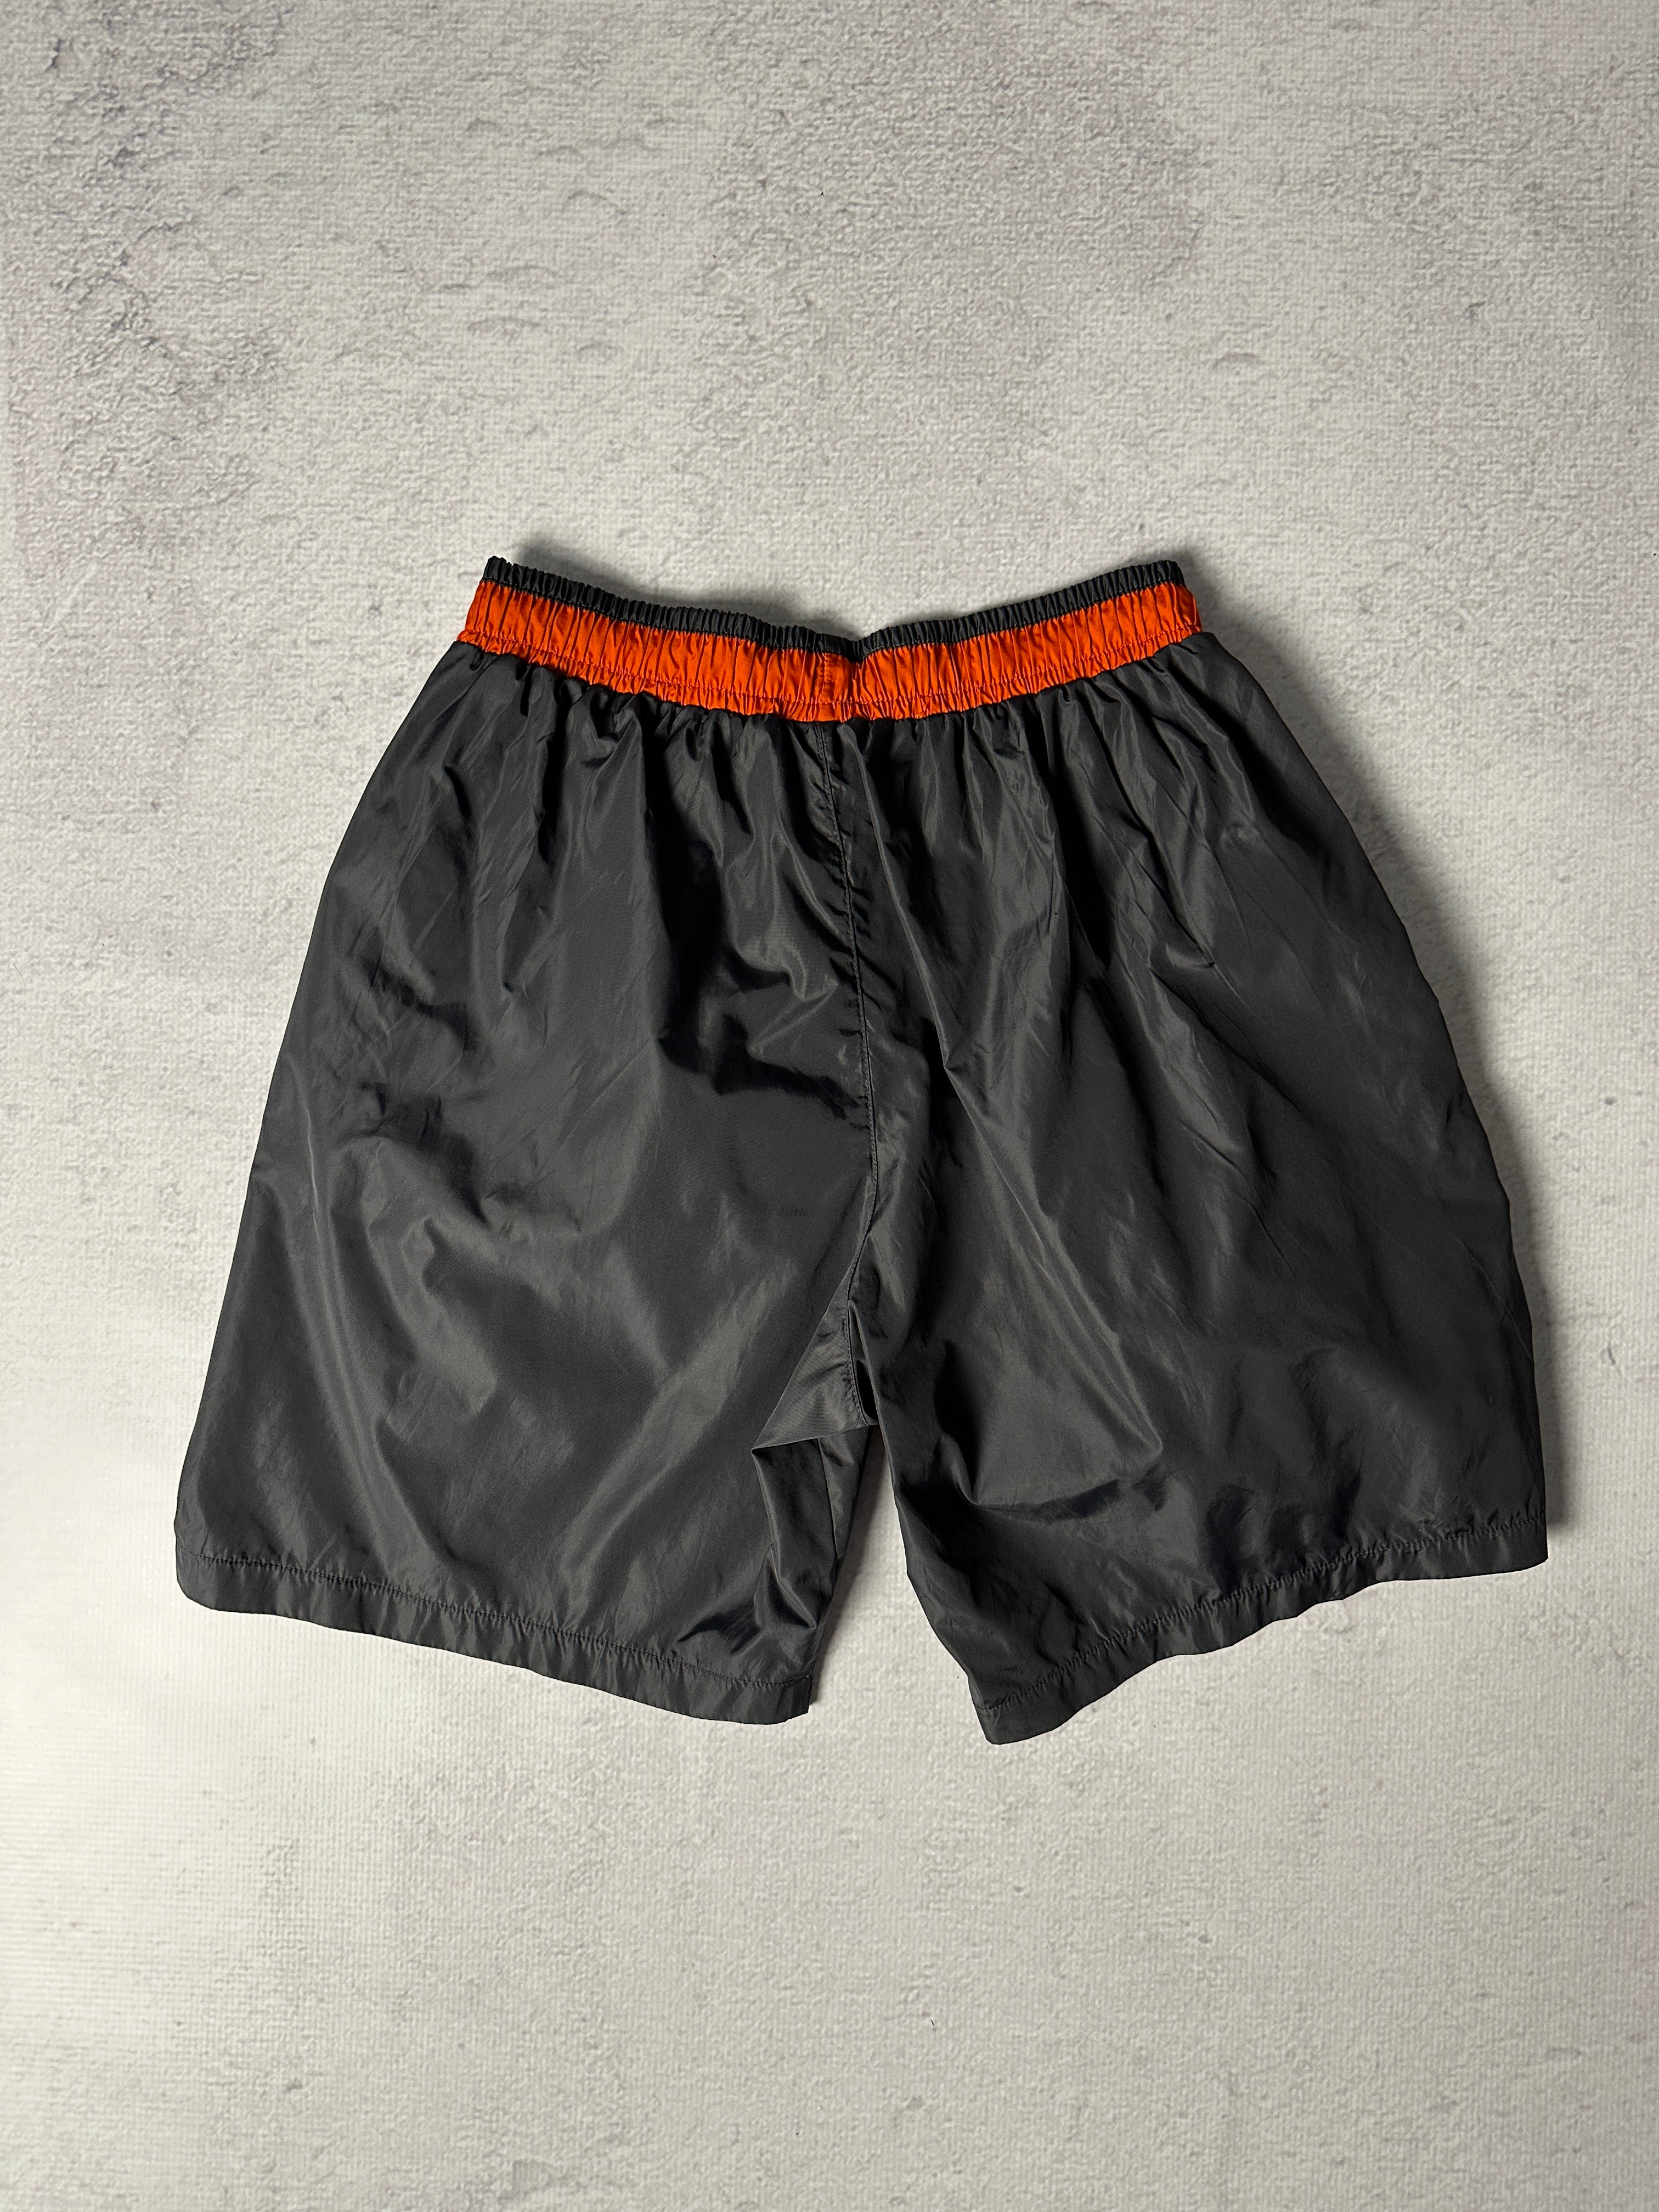 Vintage Nike Athletic Shorts - Men's Medium